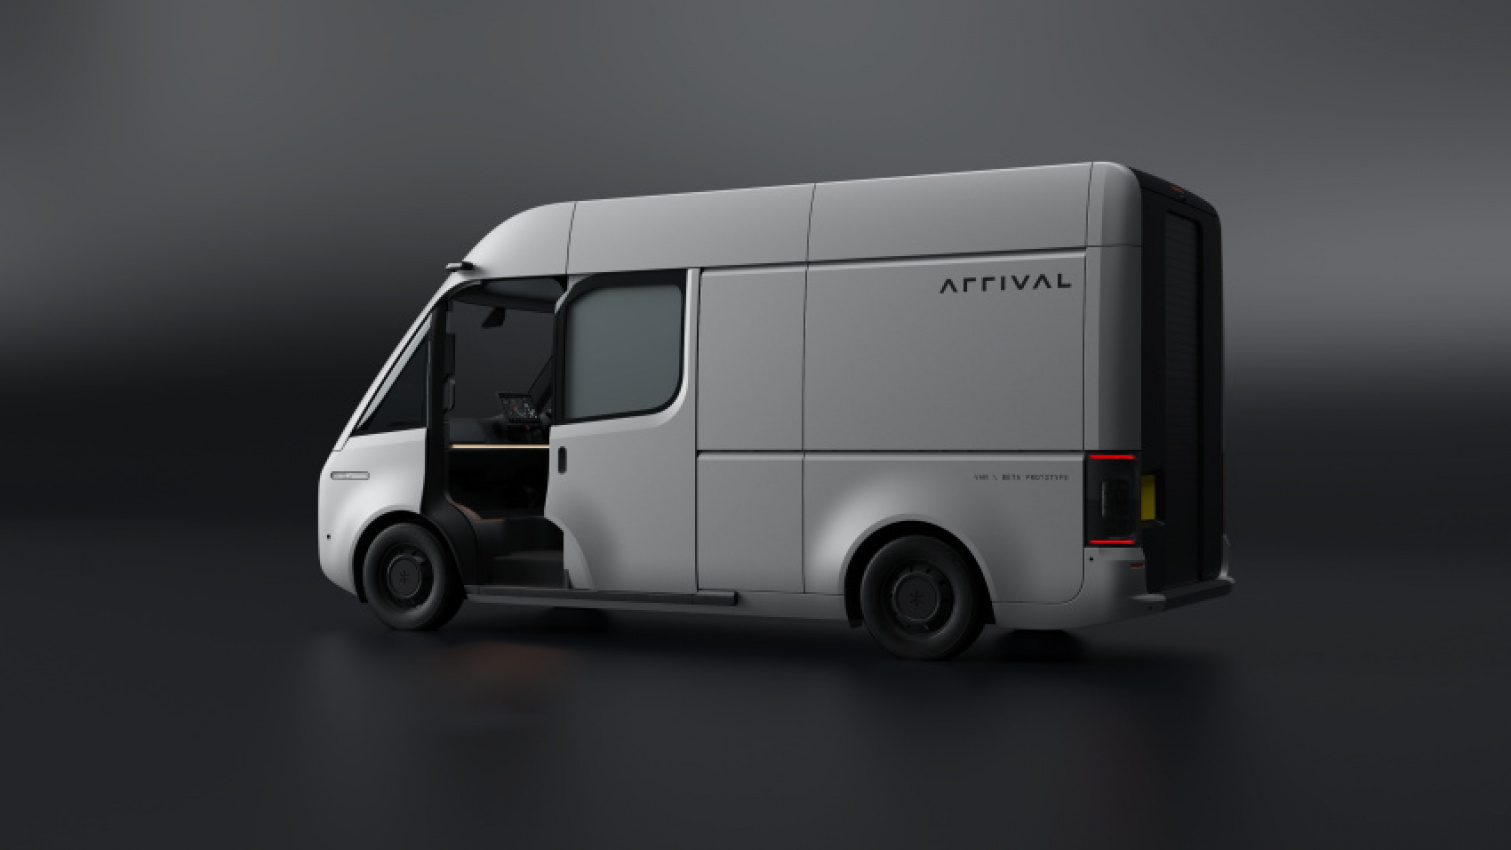 autos, cars, commercial vehicles, arrival, arrival reveals new-look electric van